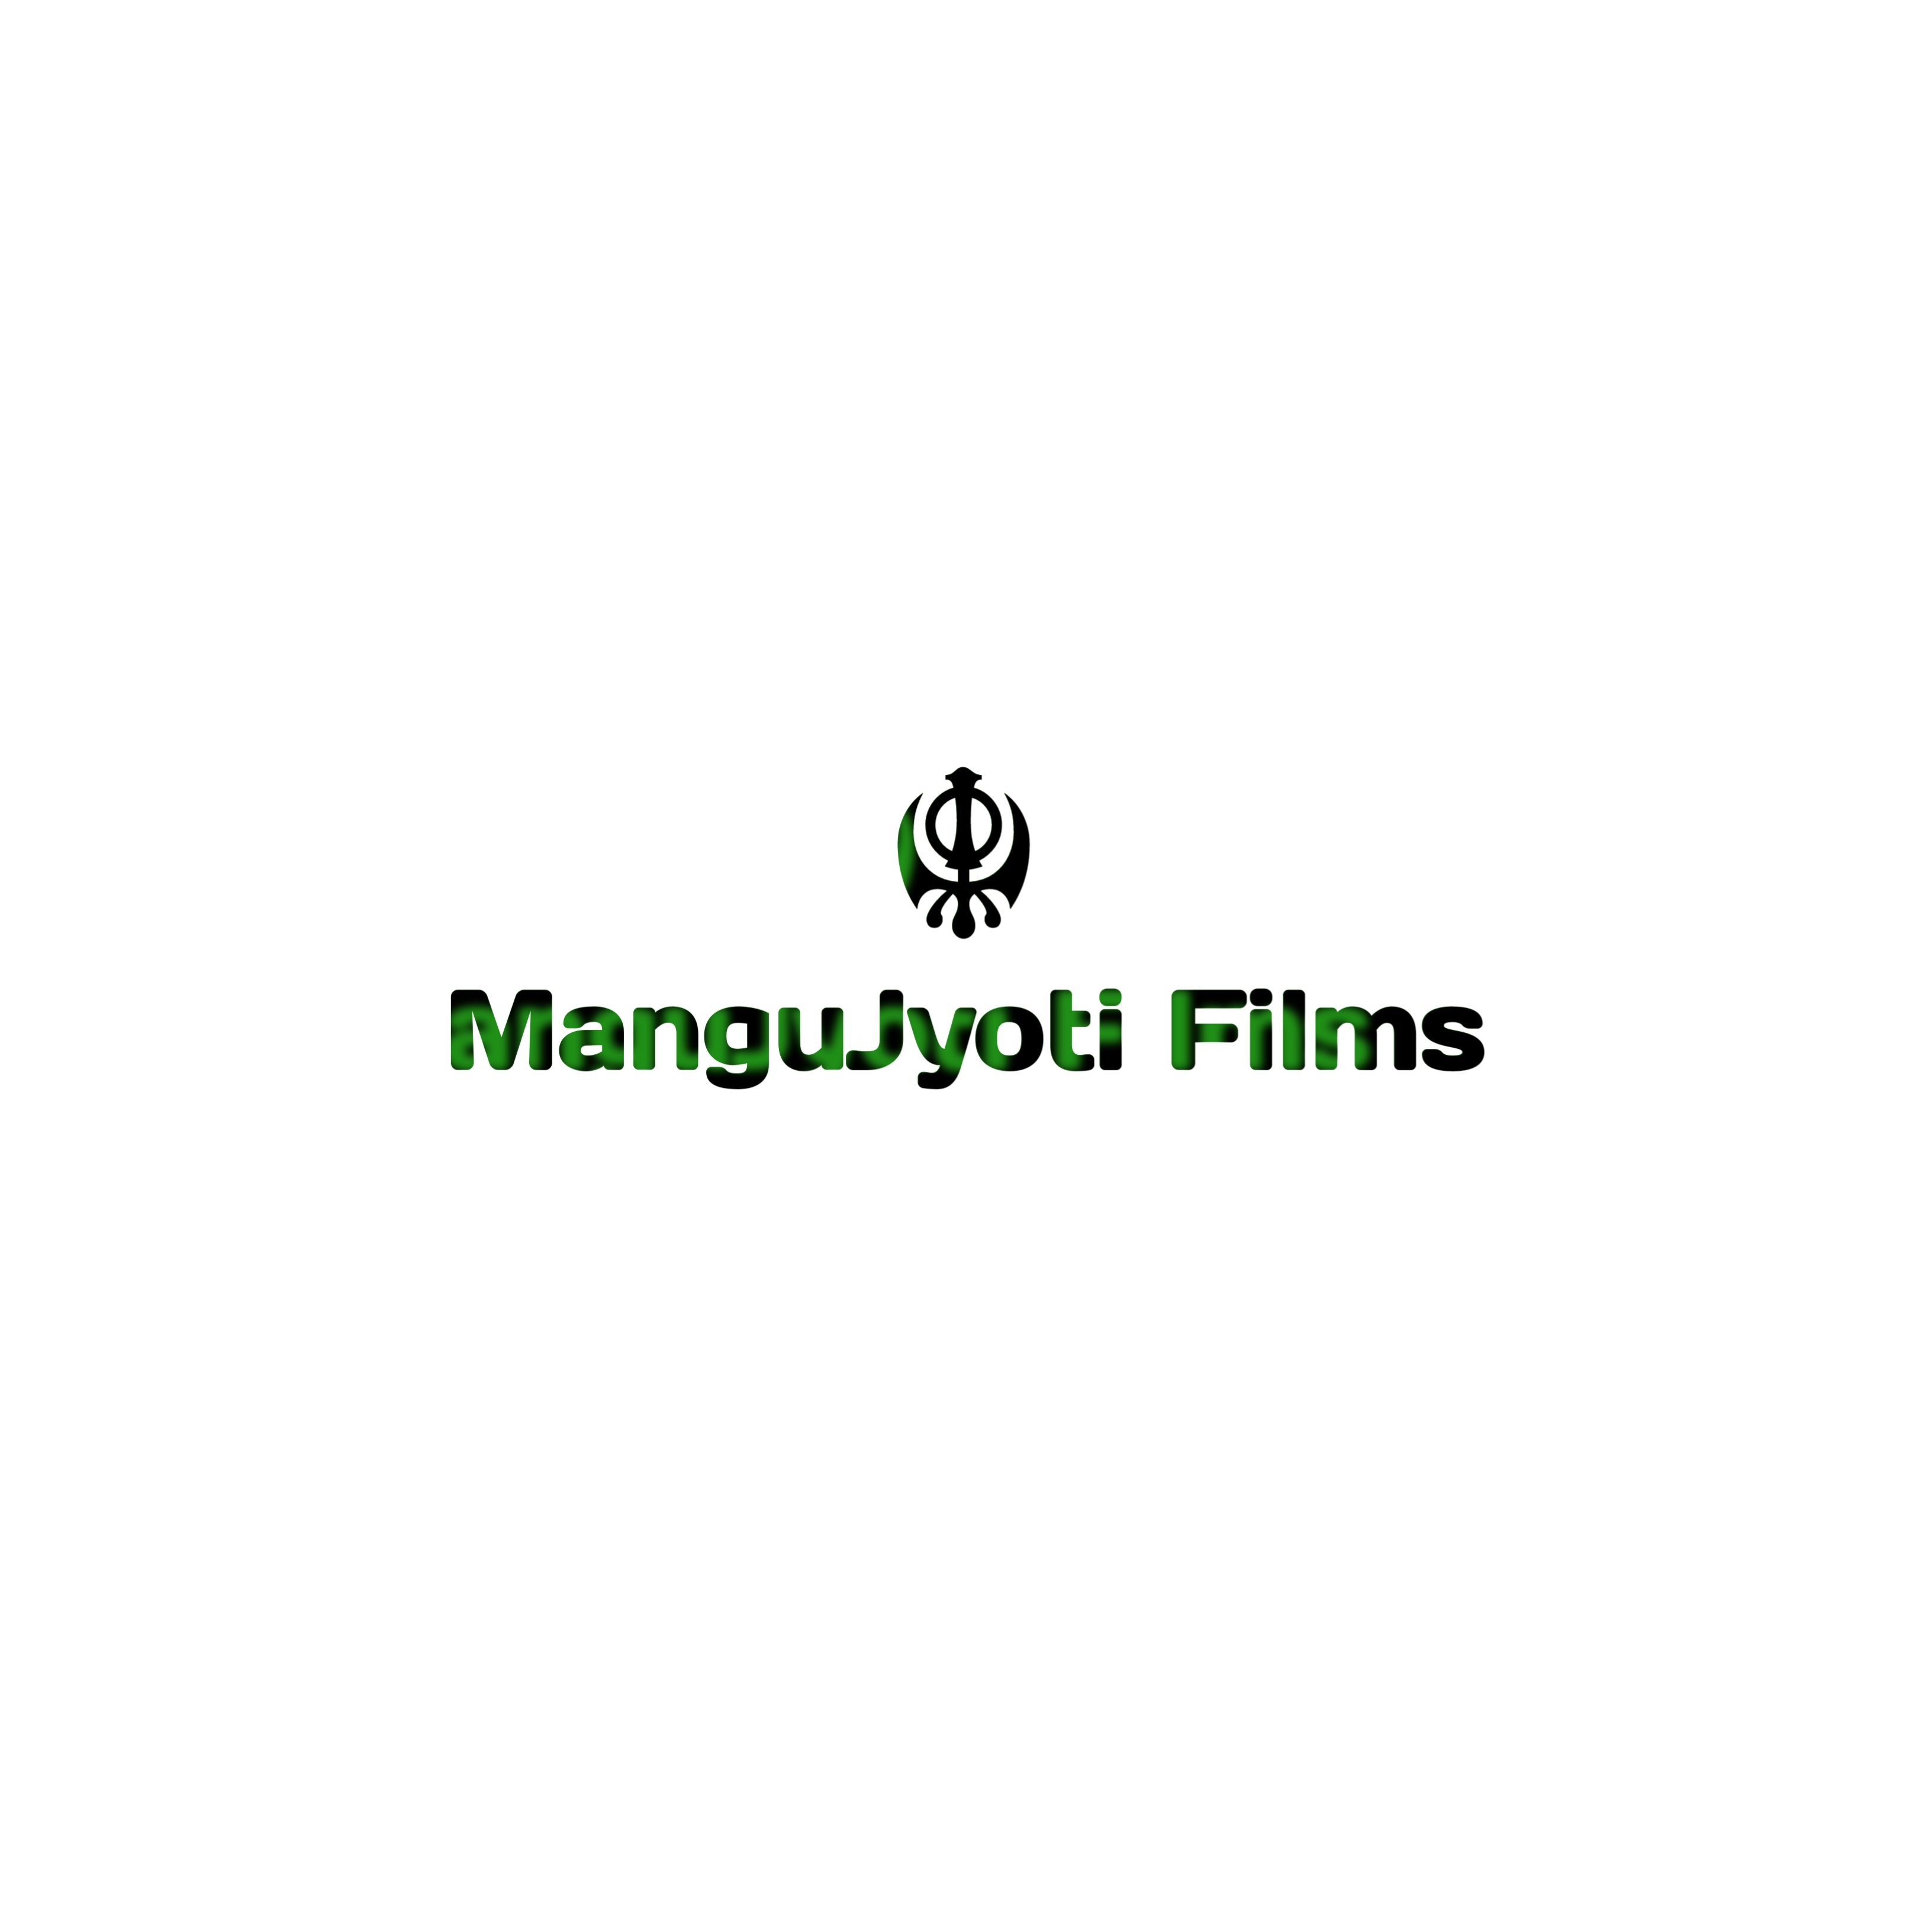 ManguJyotiFilms.jpg